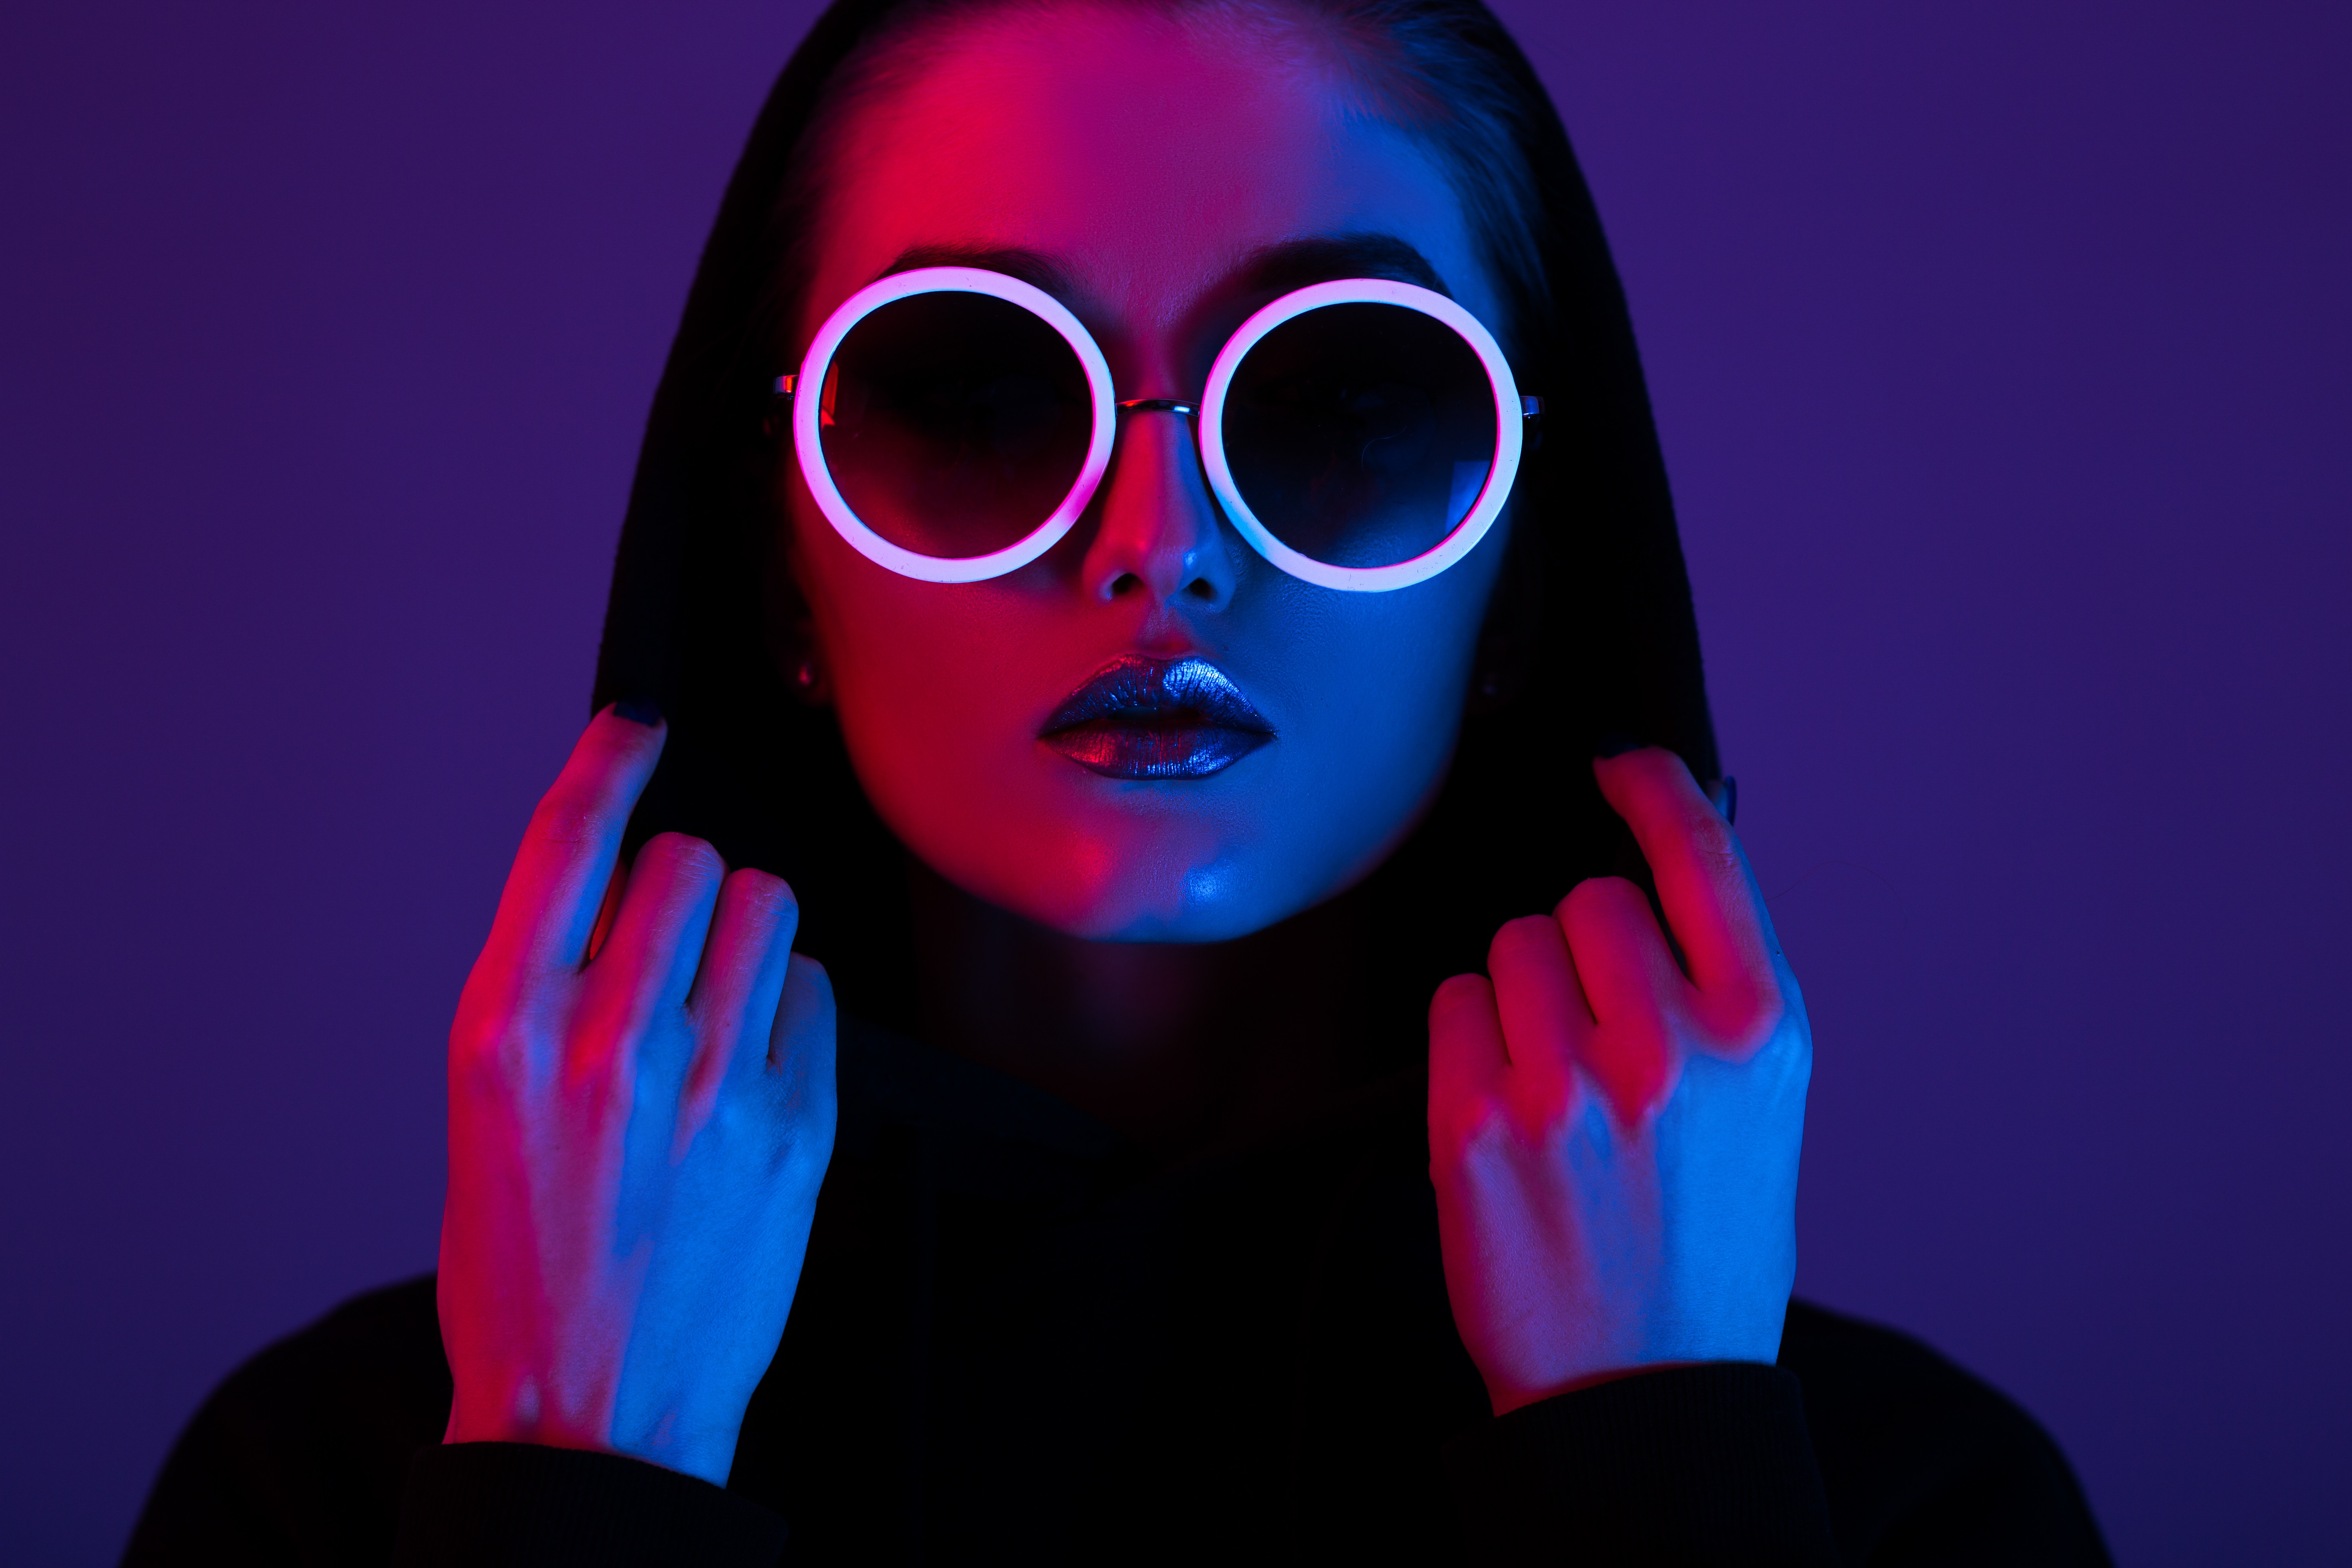 People 5472x3648 neon sunglasses lights red blue hoods portrait violet face sweater closeup low light simple background